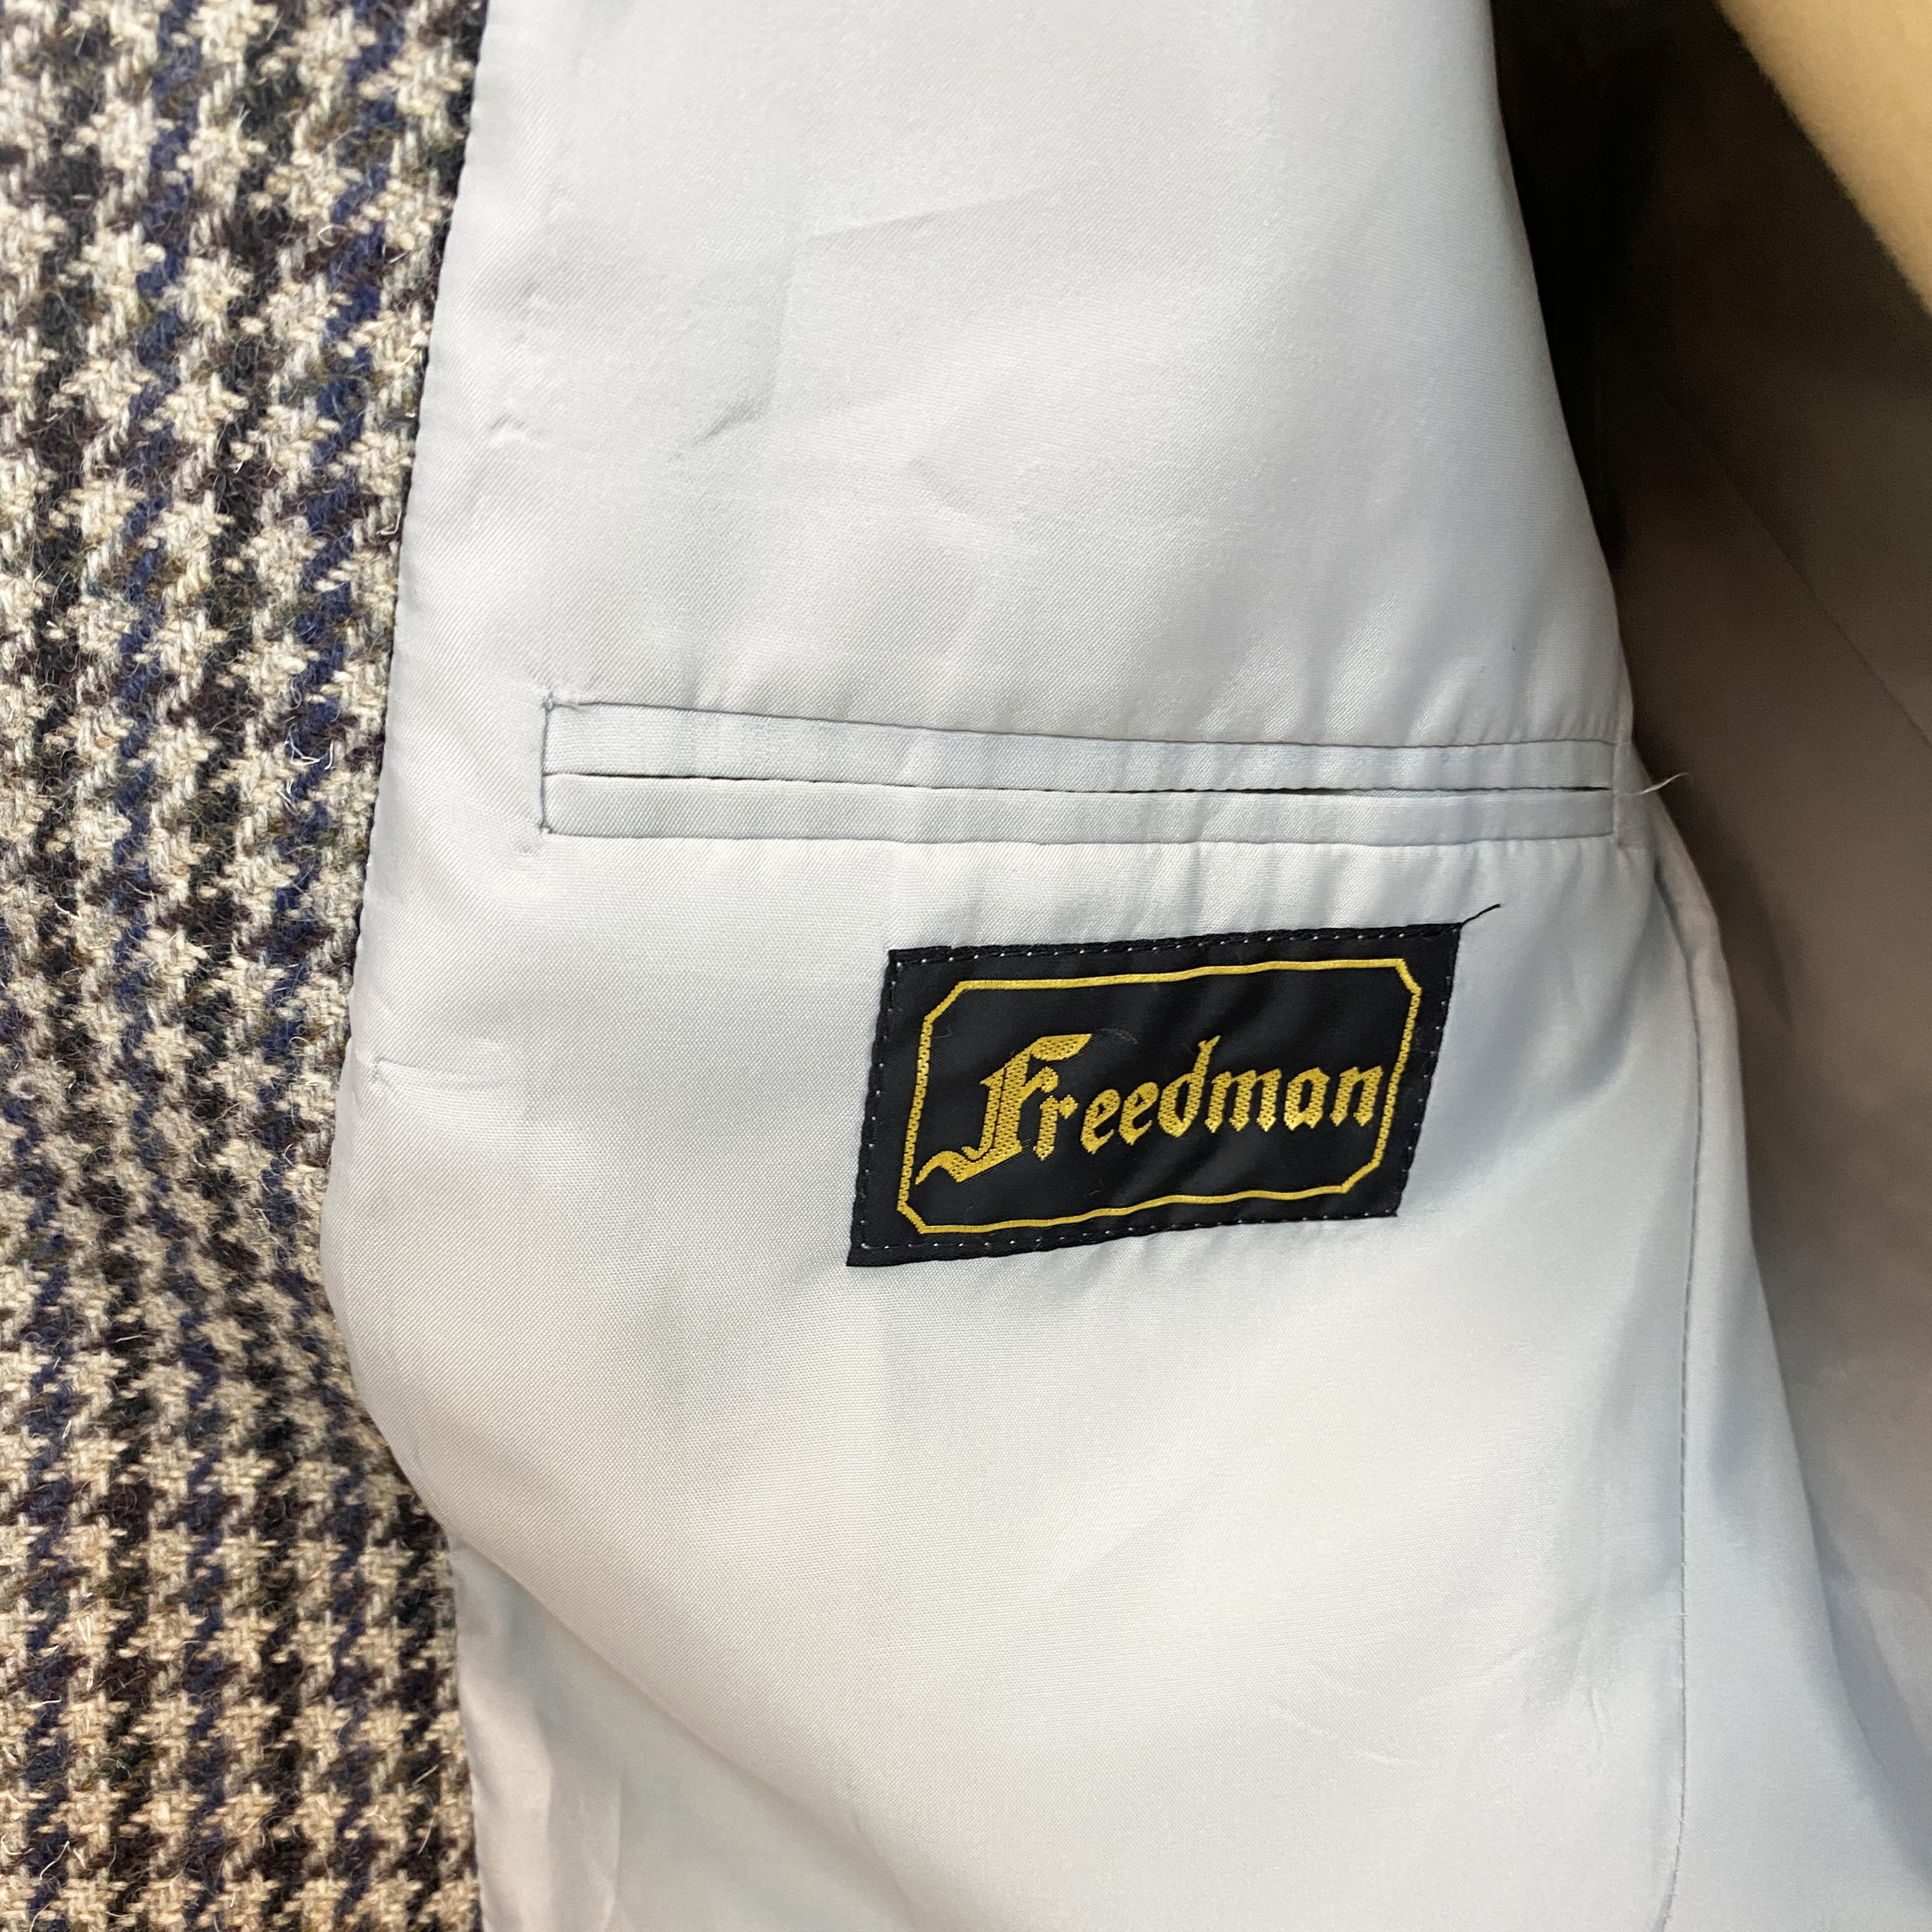 Freedman Tweed Jacket